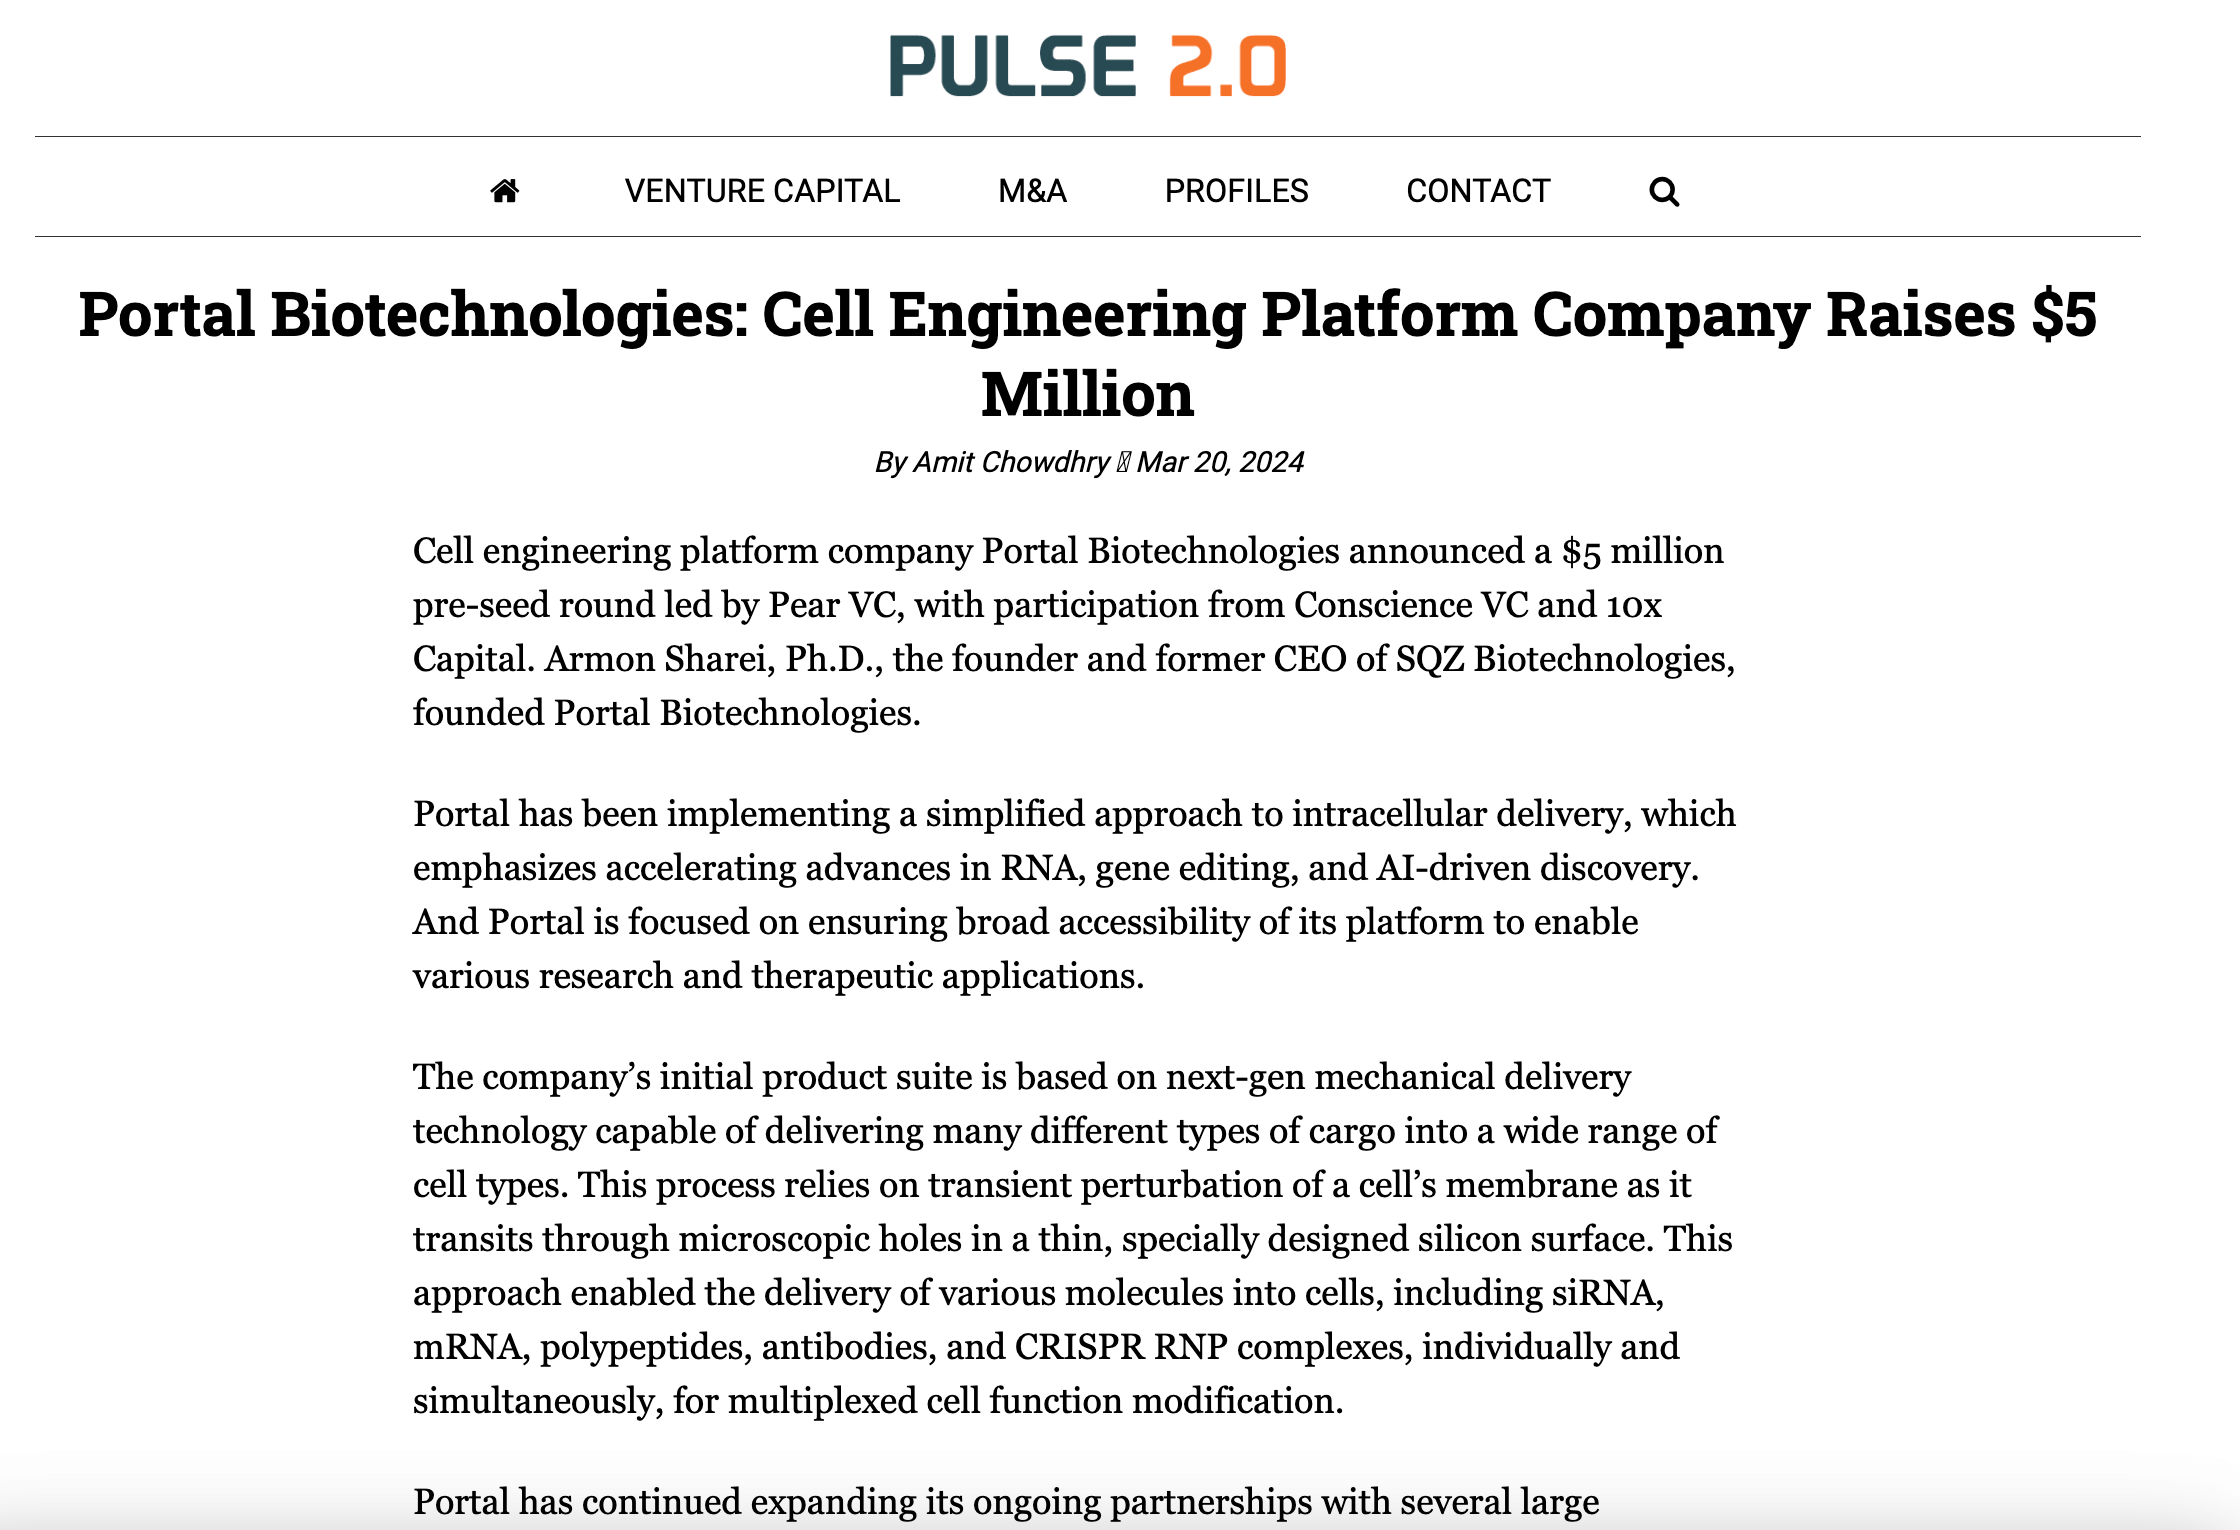 Portal Biotechnologies: Cell Engineering Platform Company Raises $5 Million